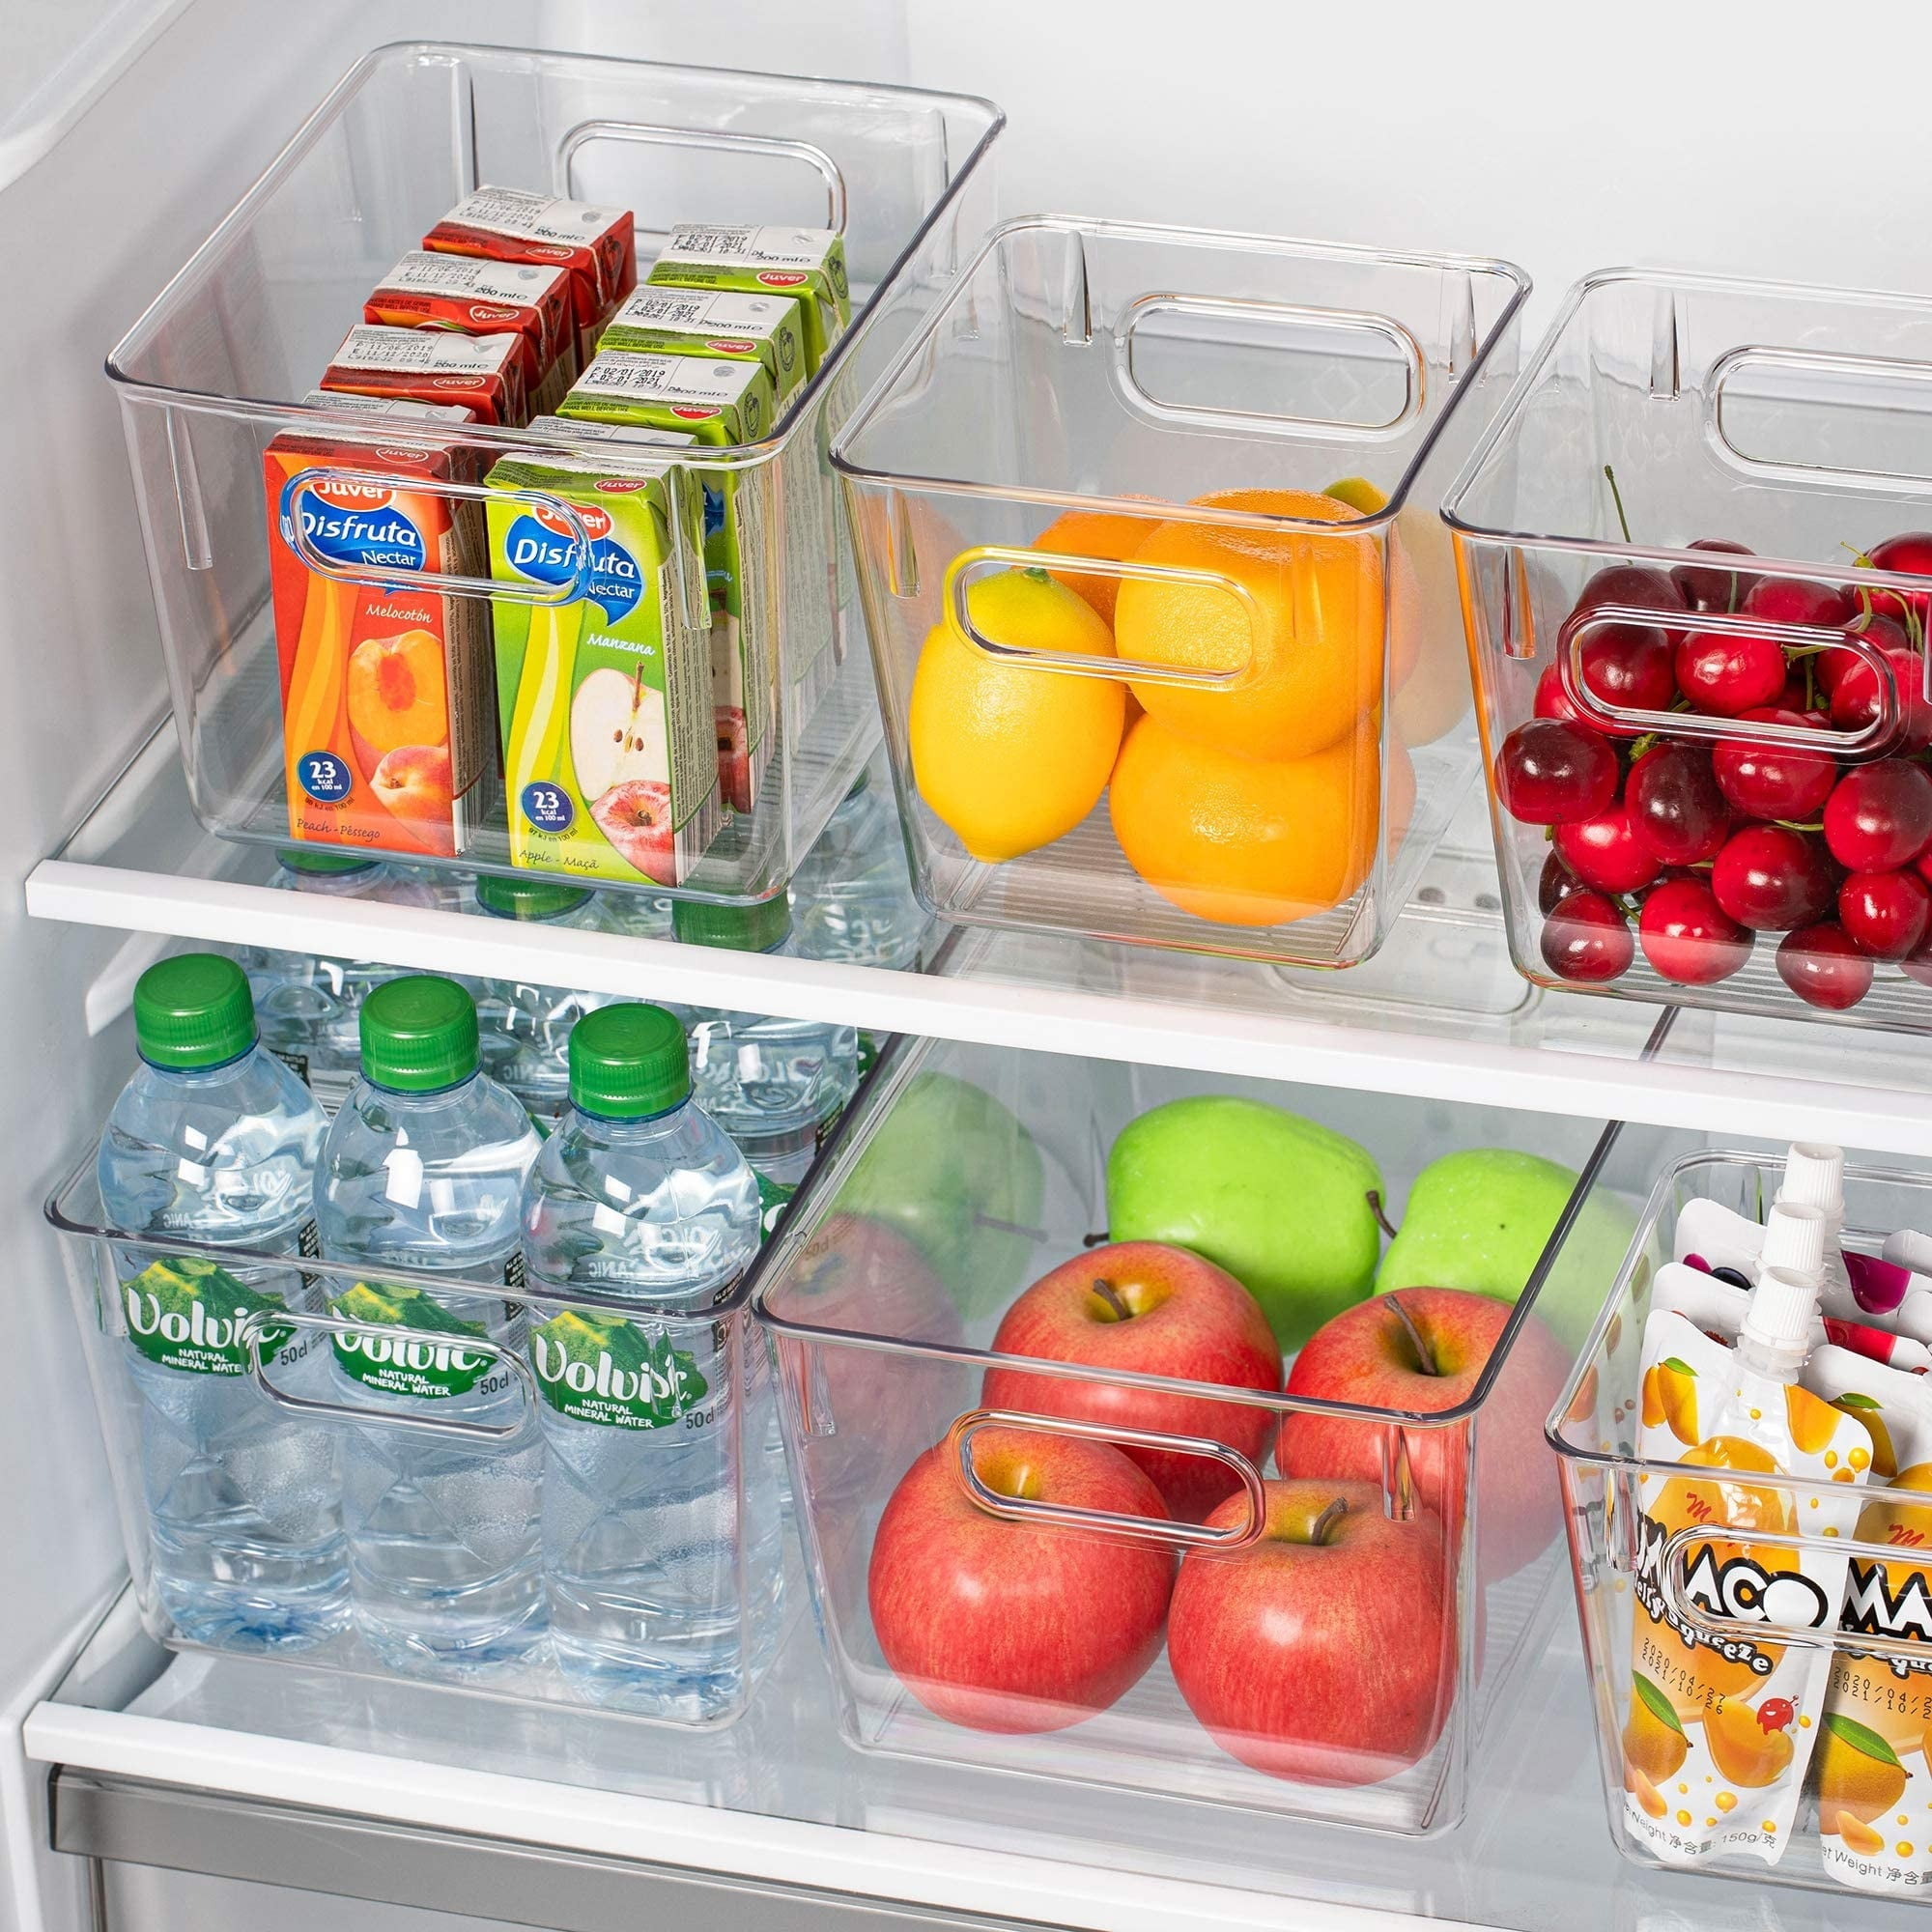 YIHONG Clear Plastic Storage Organizer Bins, 4 Pack Pantry Food Storage Bins  with Handle for Kitchen,Refrigerator, Freezer,Cabinet Organization and  Storage